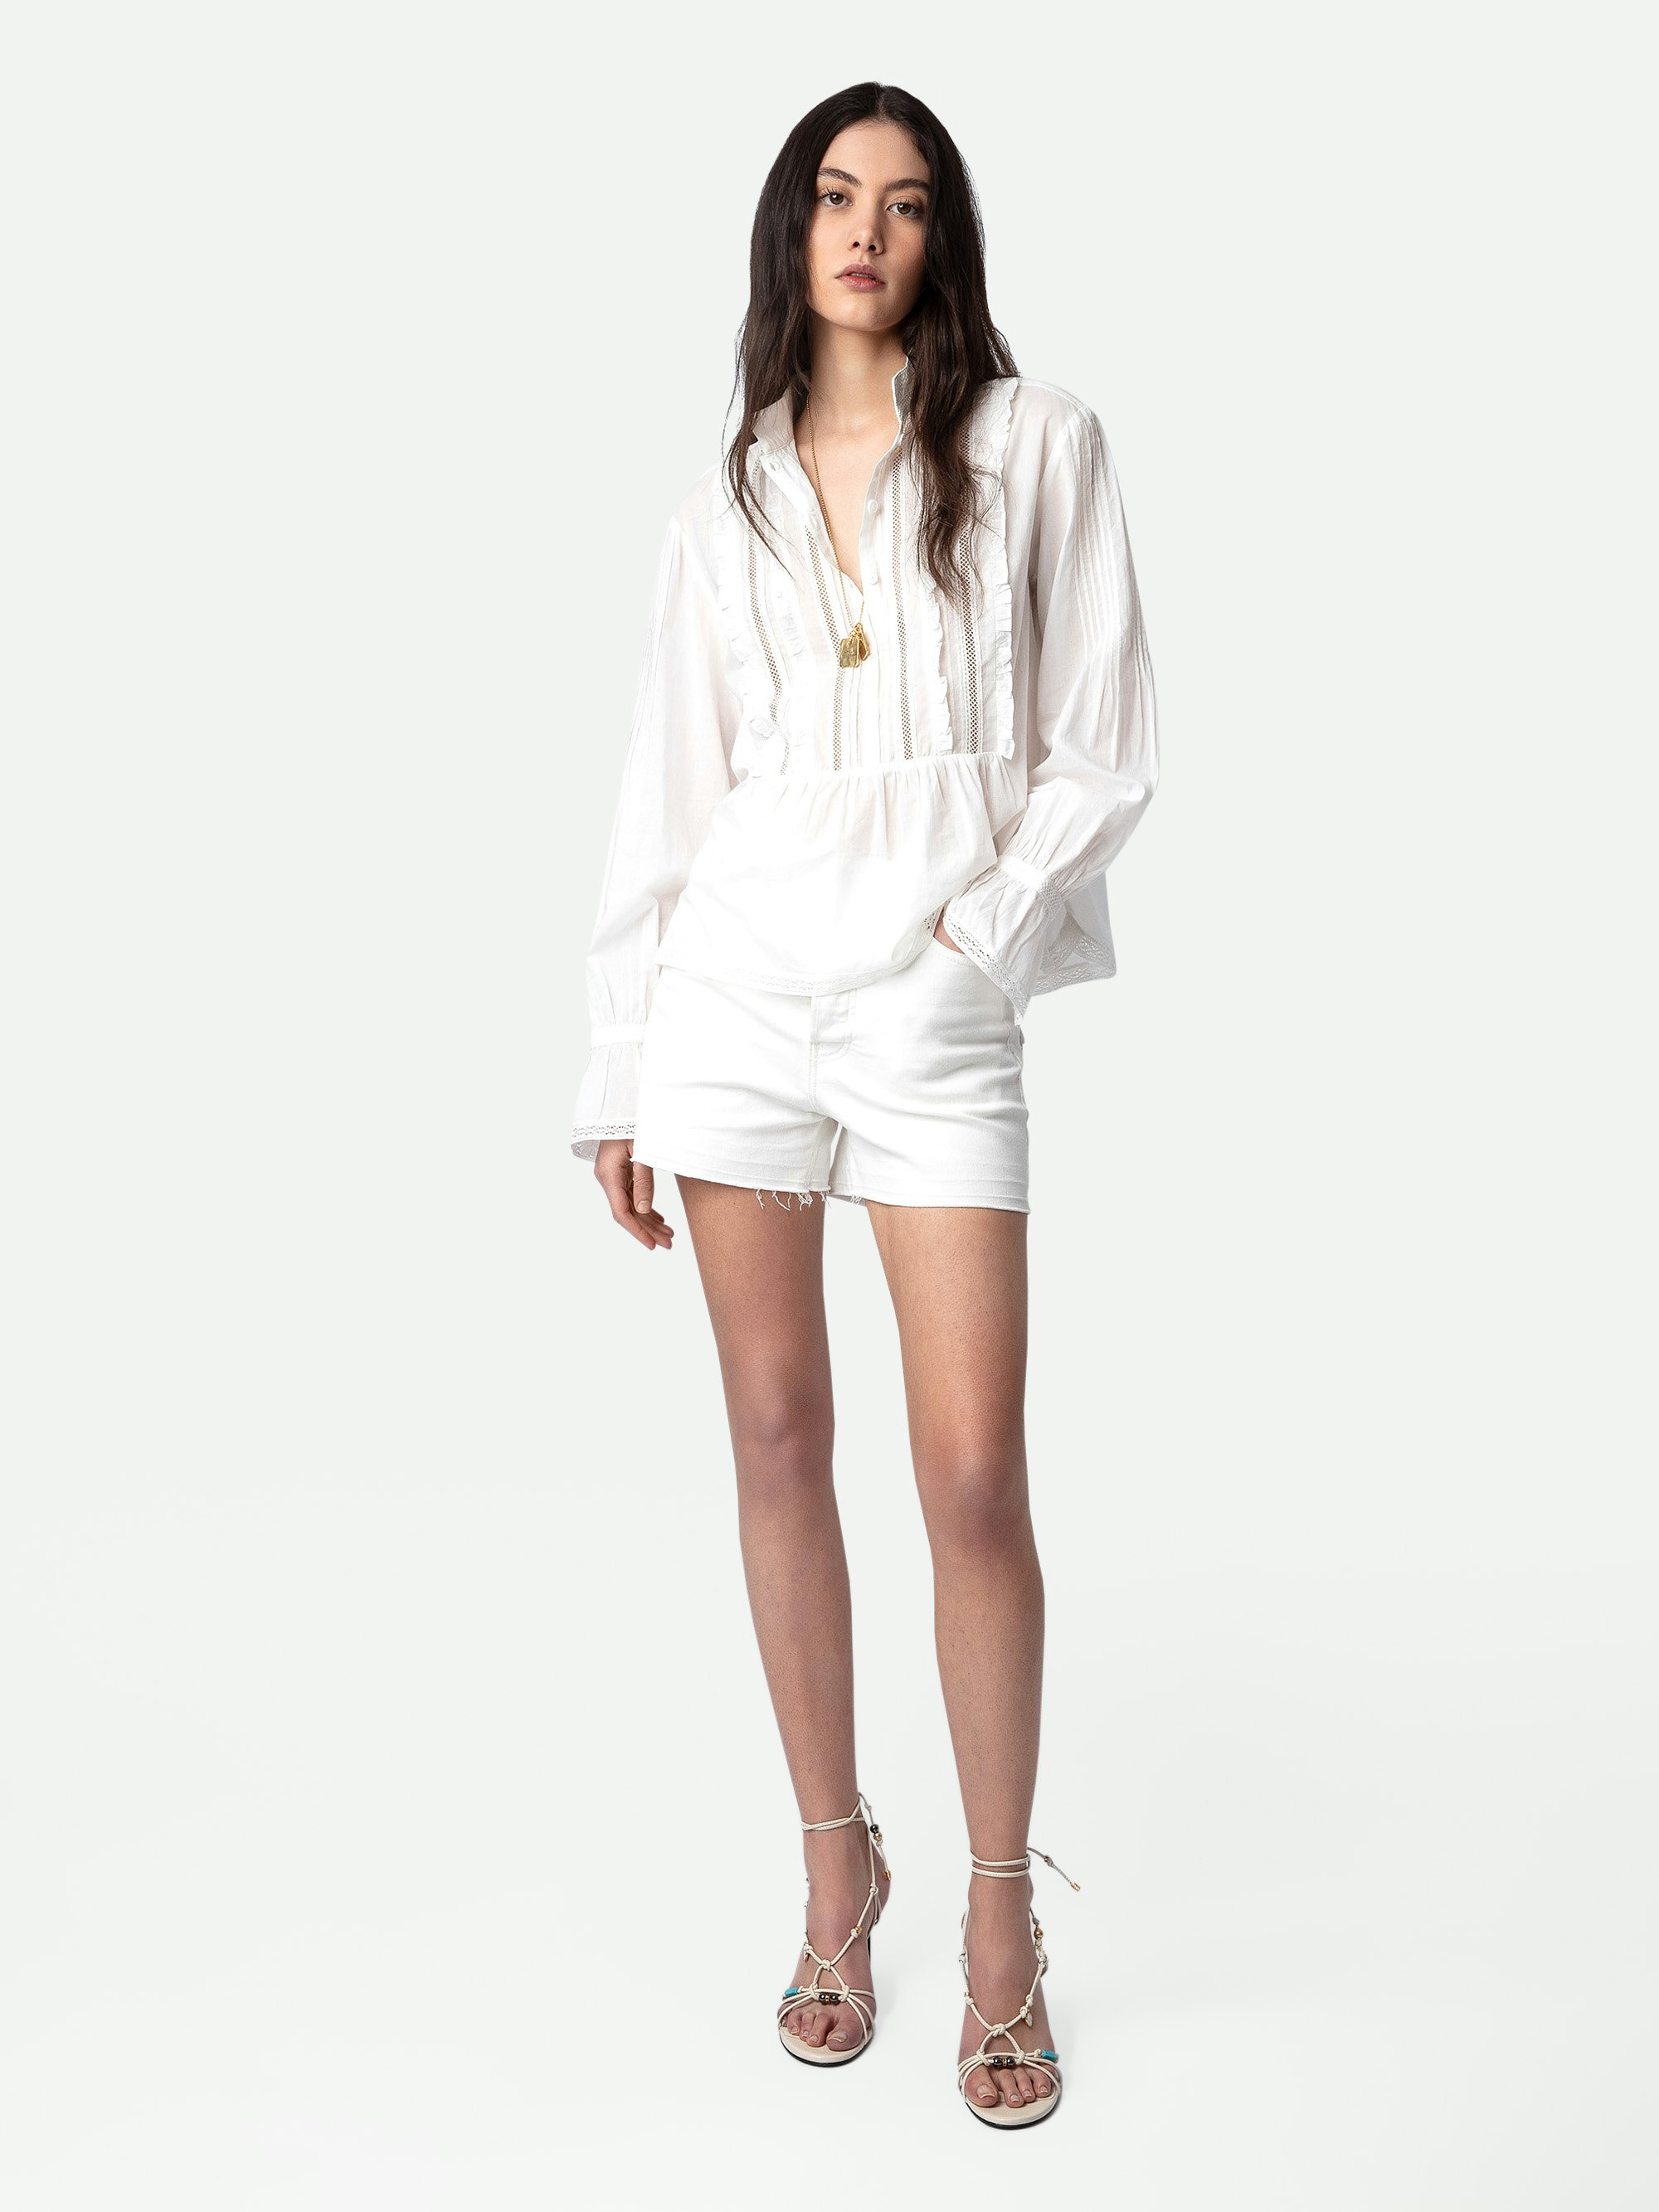 Tricia Shirt - Women's white ruffled blouse.